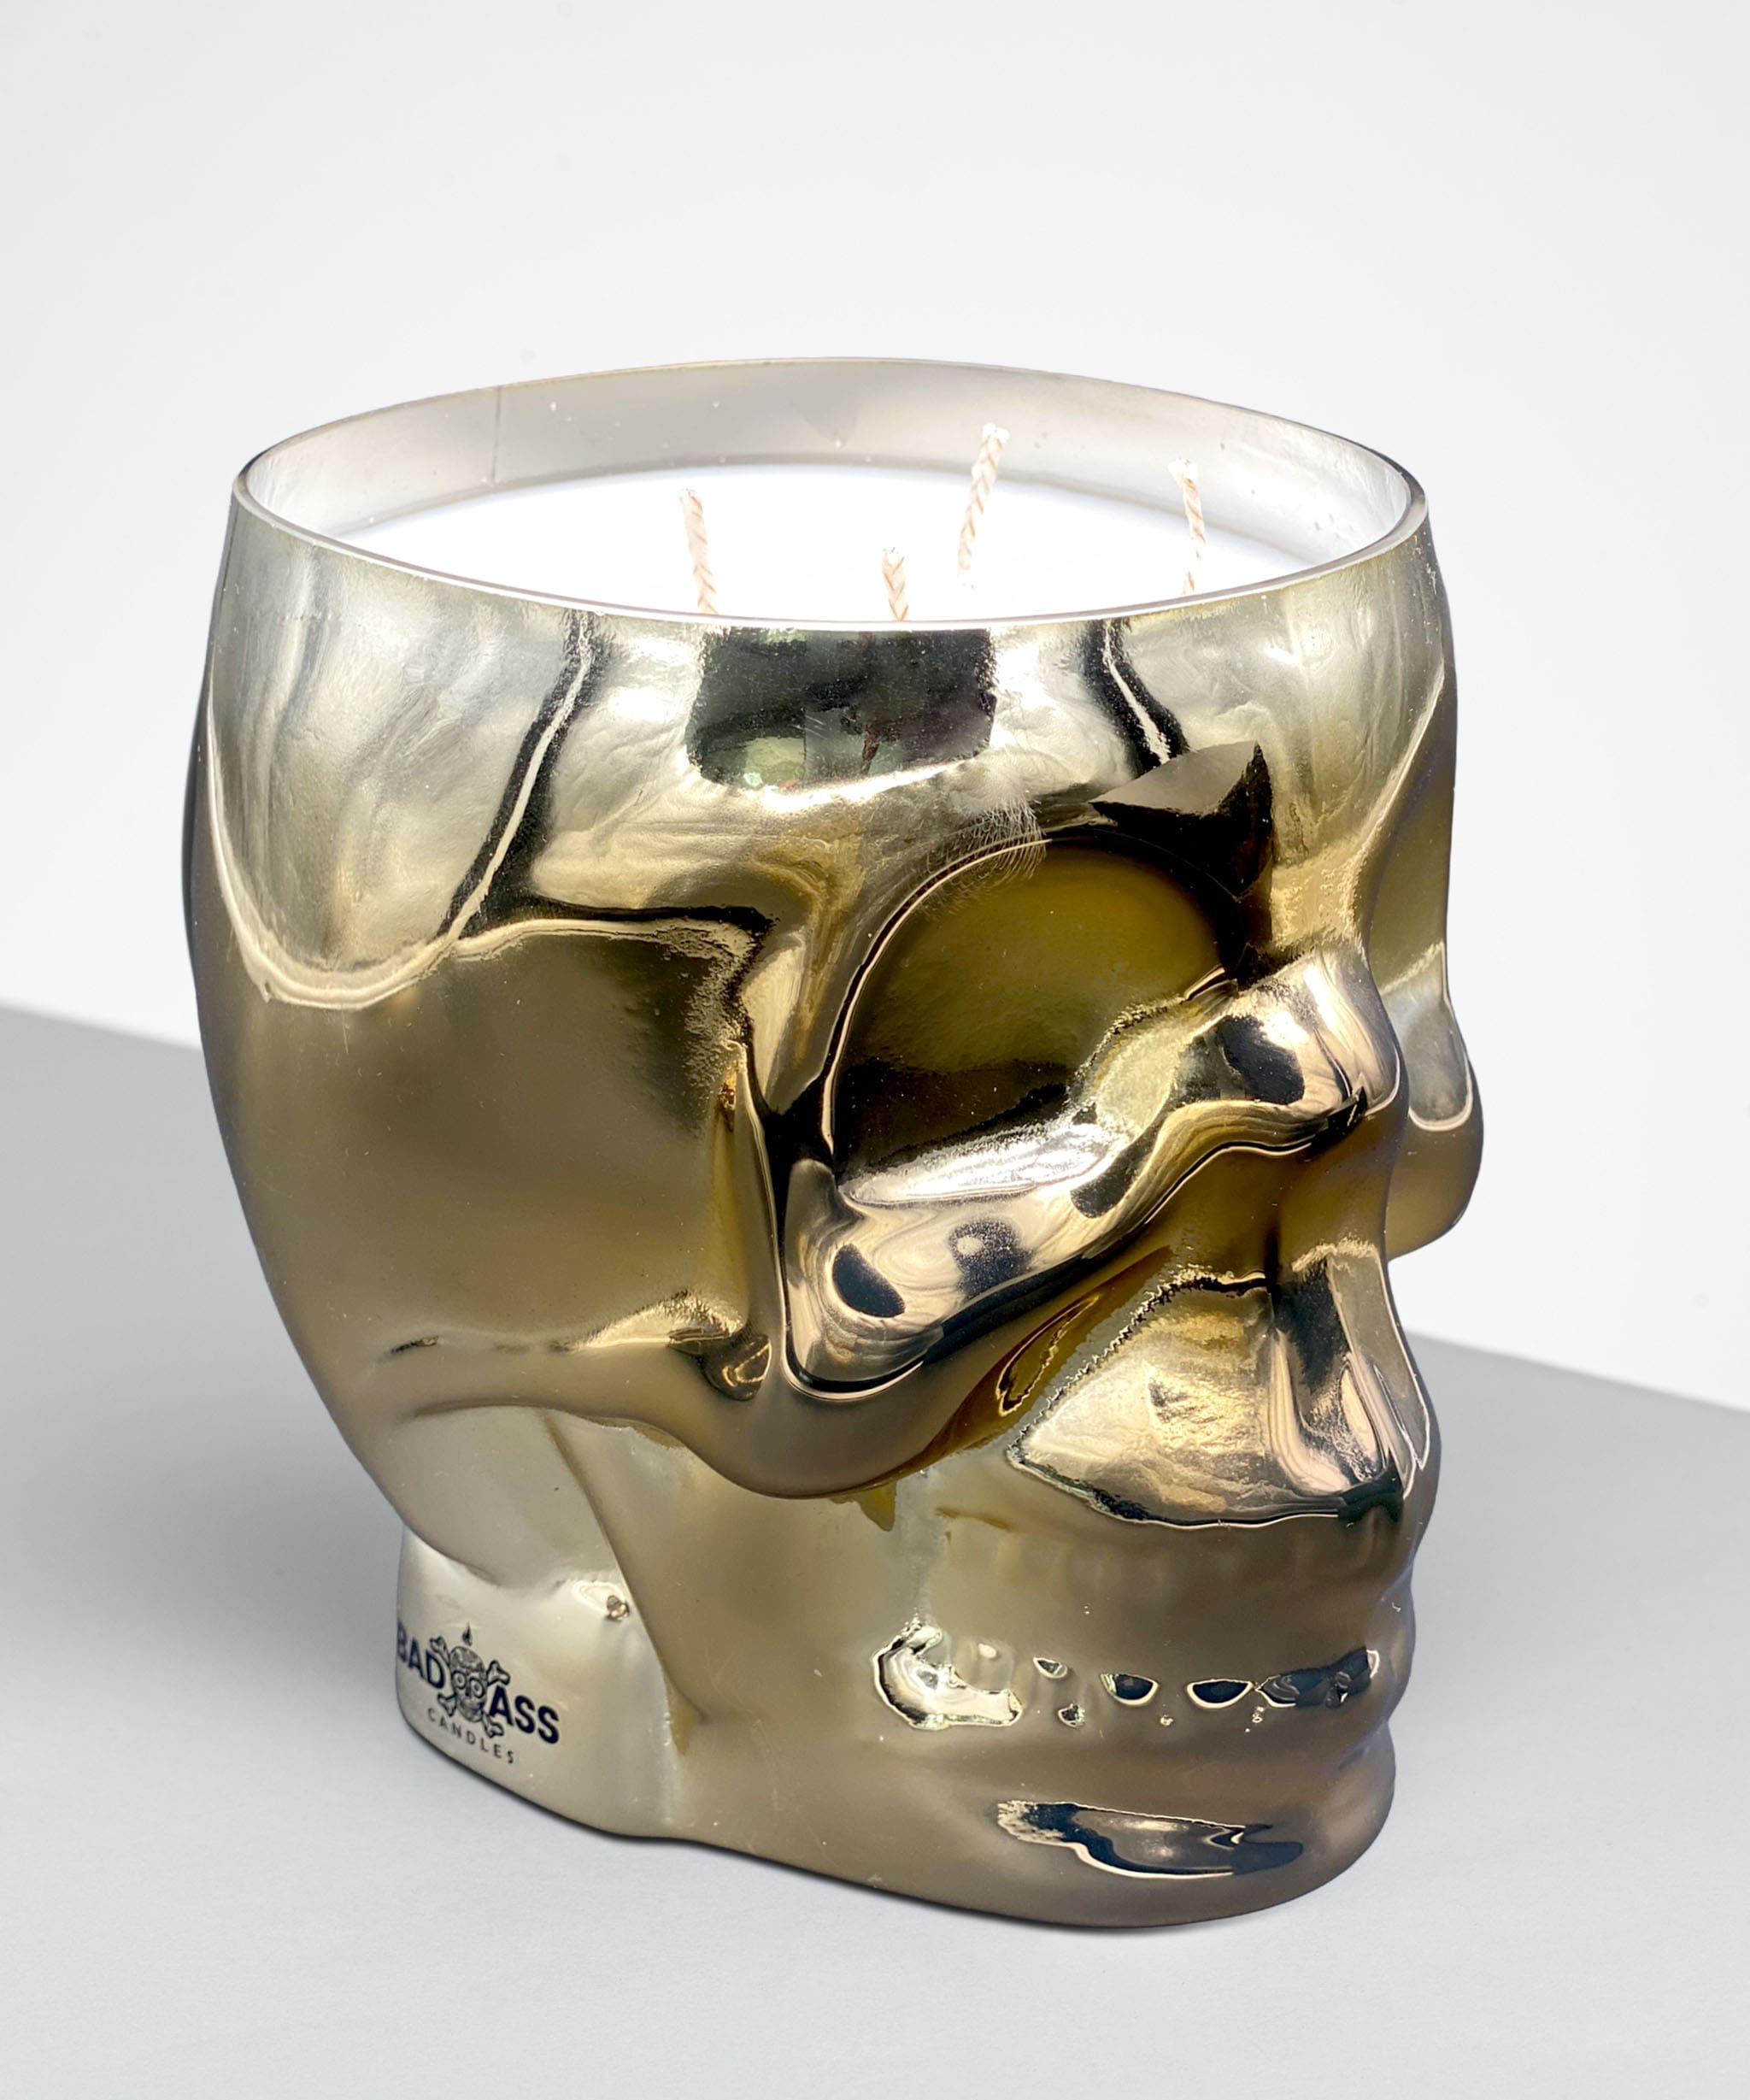 The Grand Gold Badass Skull (40oz)